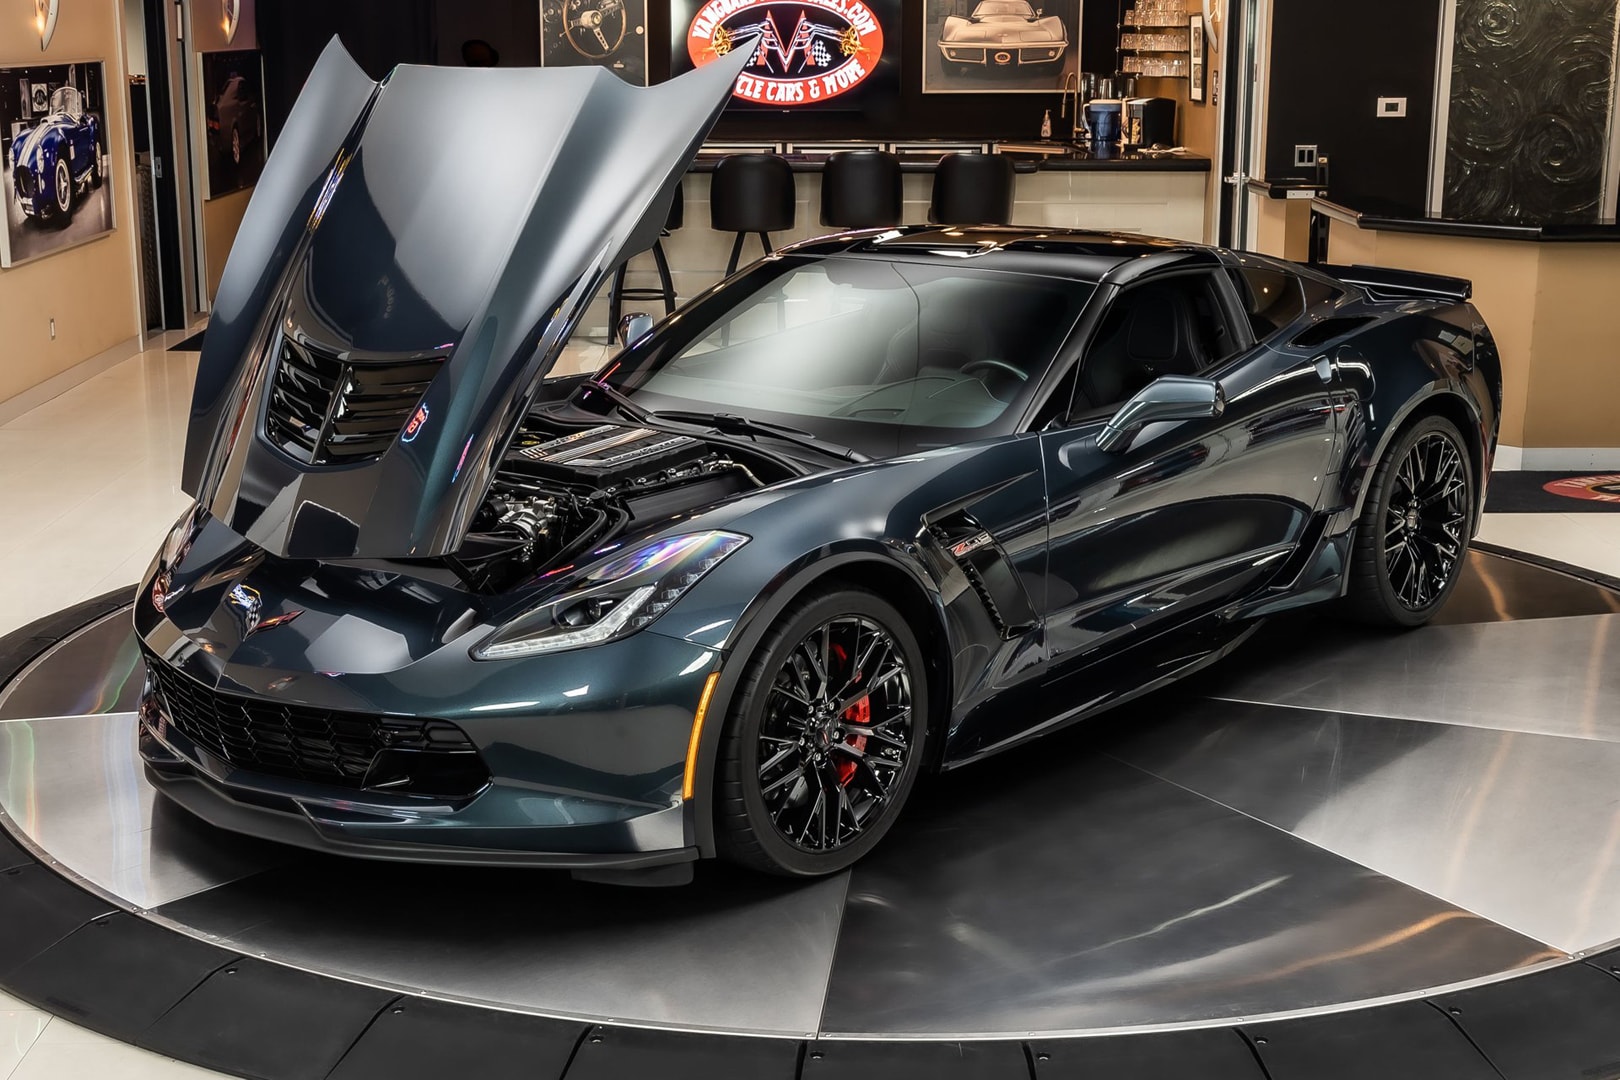 Experience the 2019 Corvette Z06